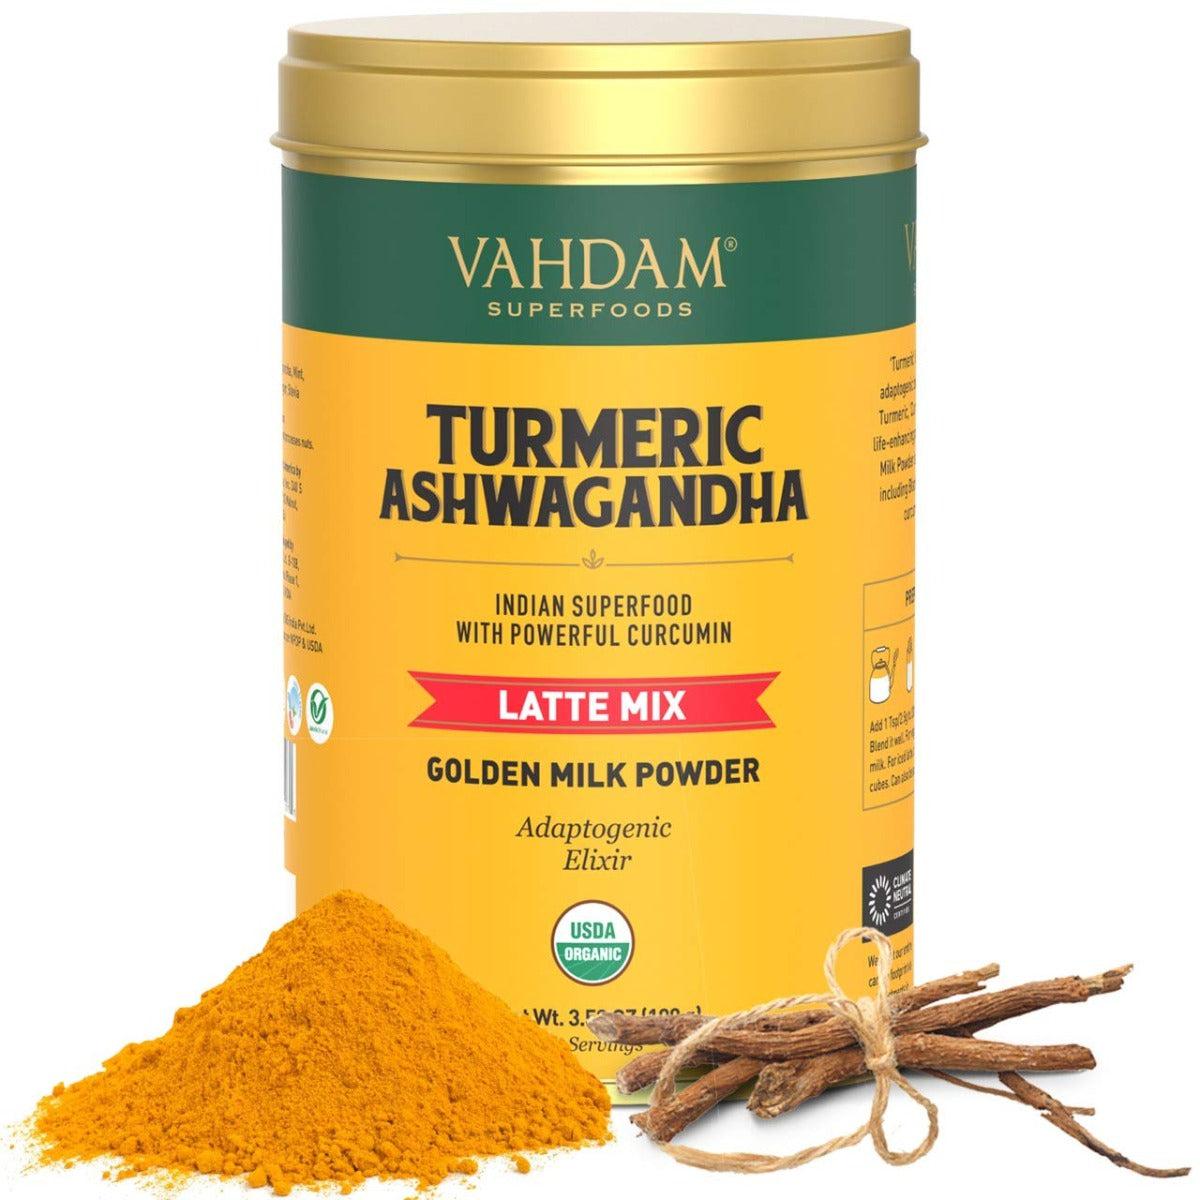 VAHDAM Organic Turmeric Ashwagandha Latte Mix Golden Milk Powder 100g